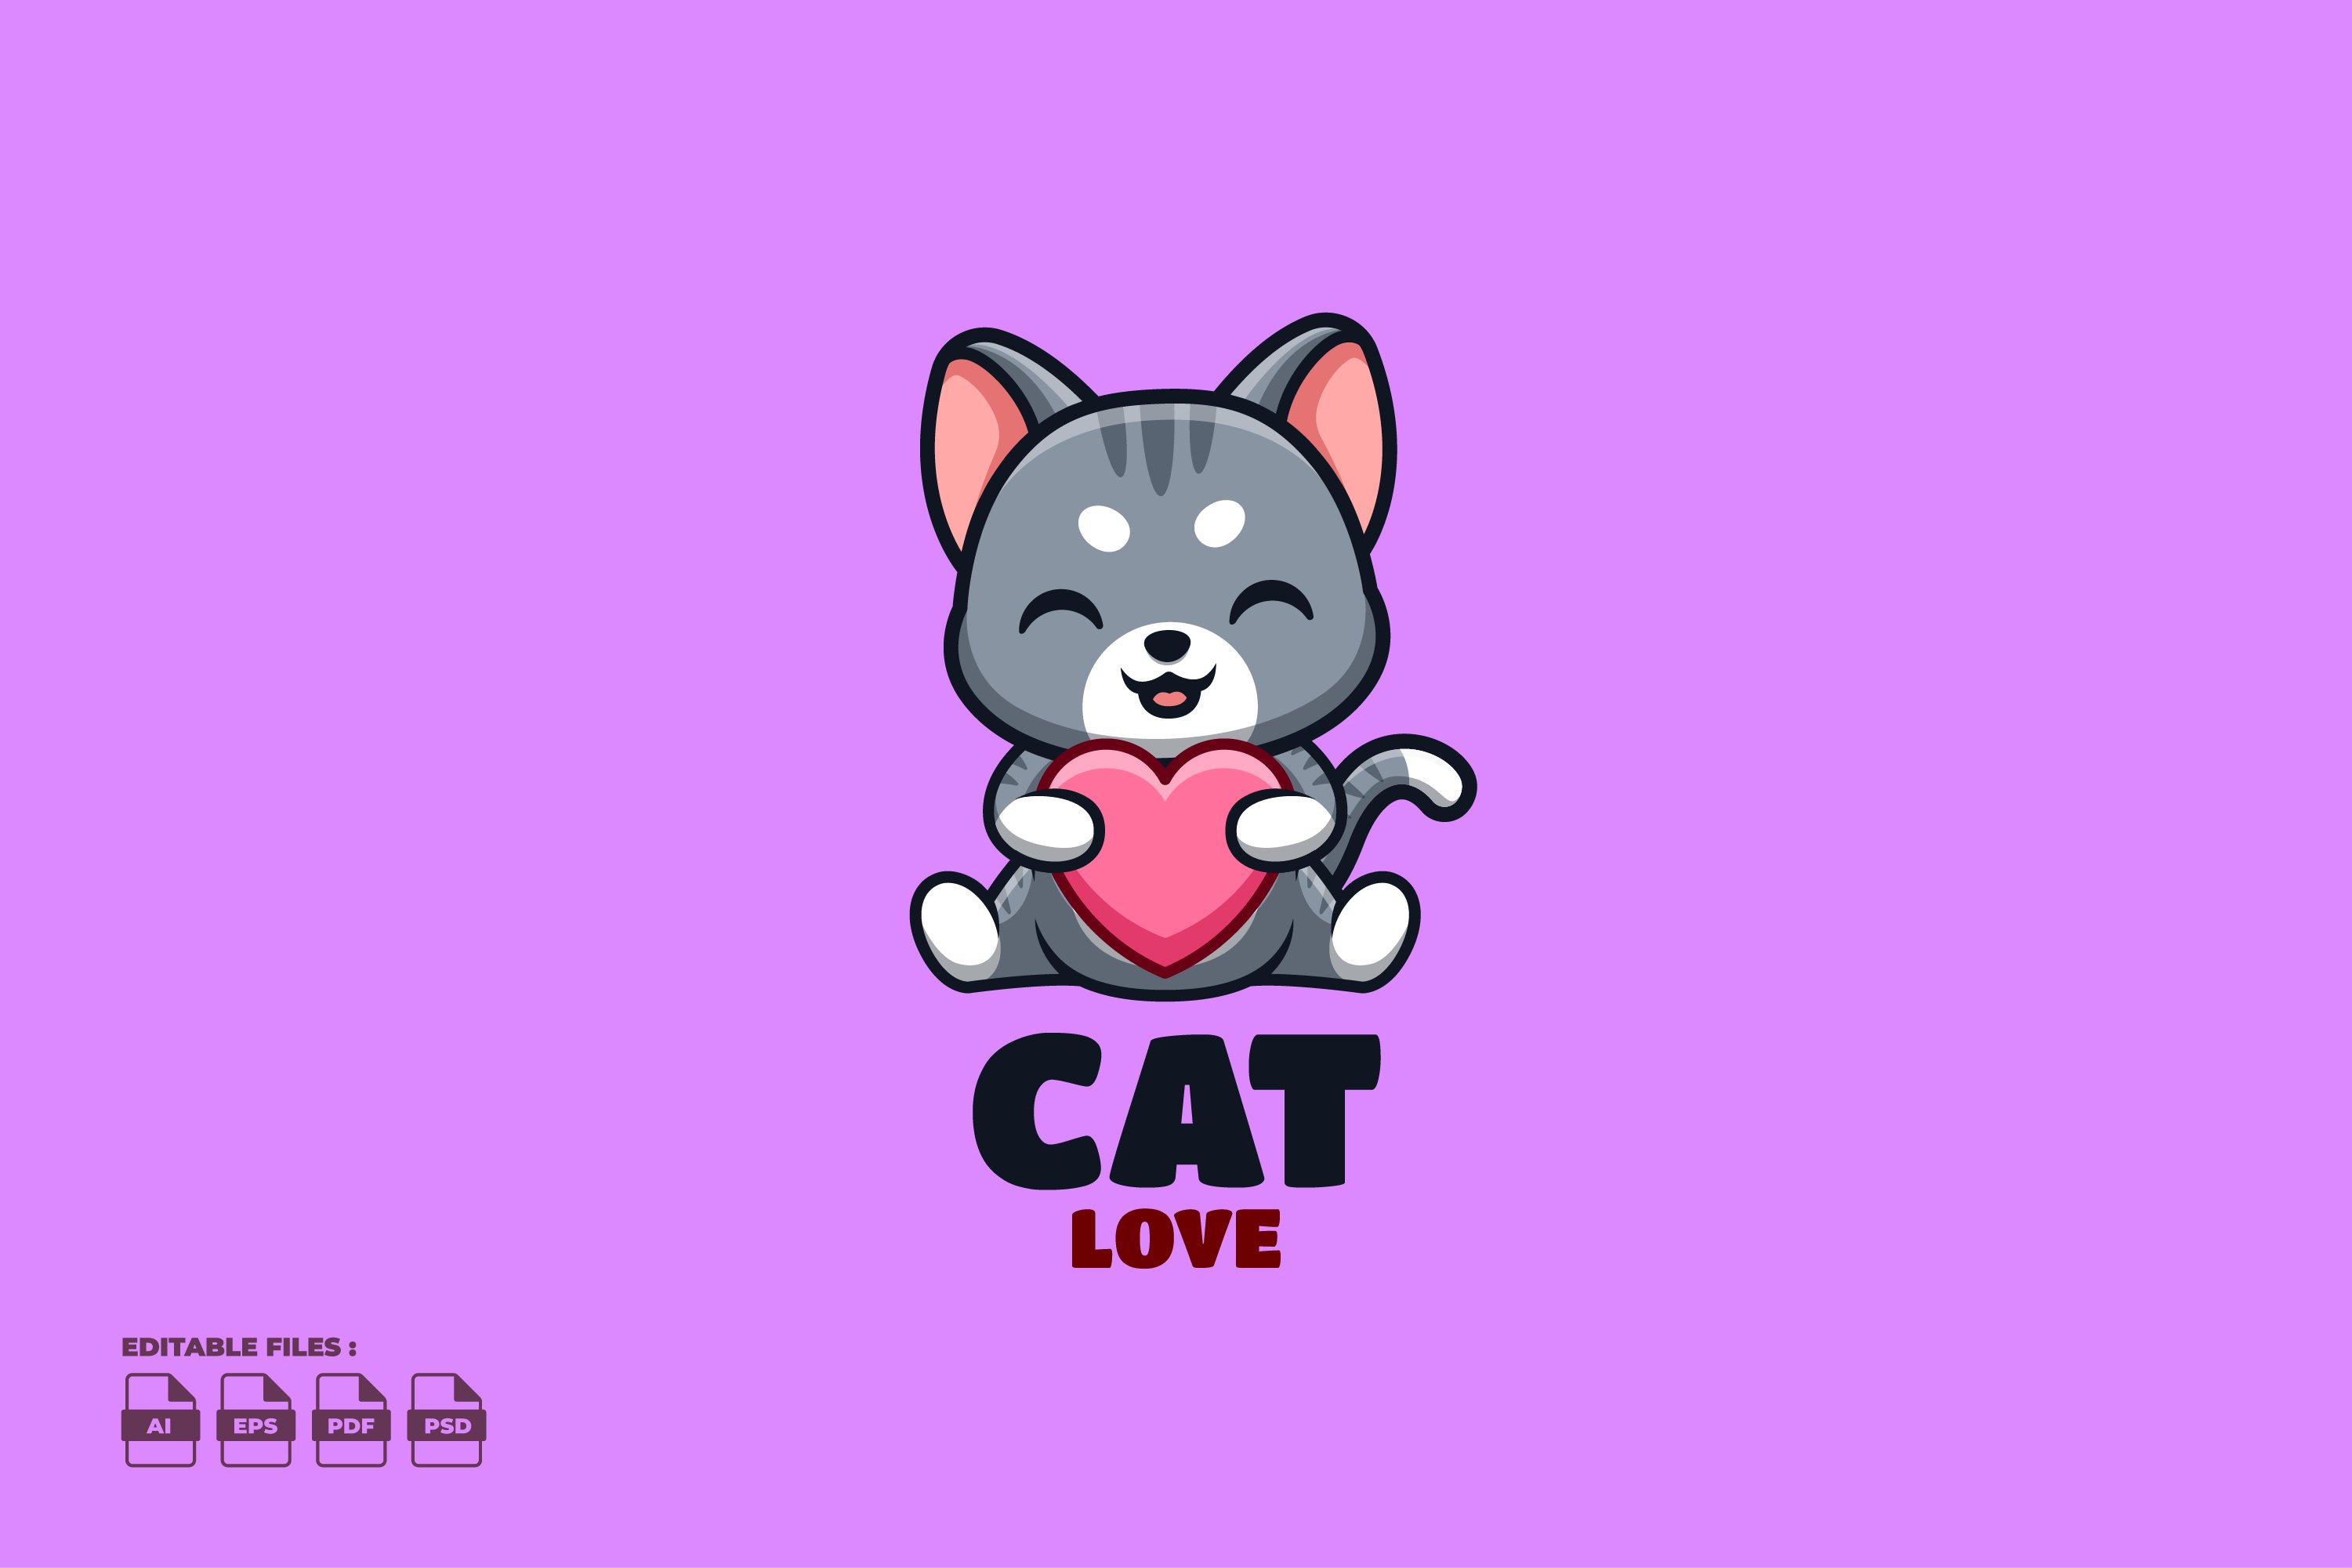 Love Domestic Cat Cute Mascot Logo cover image.